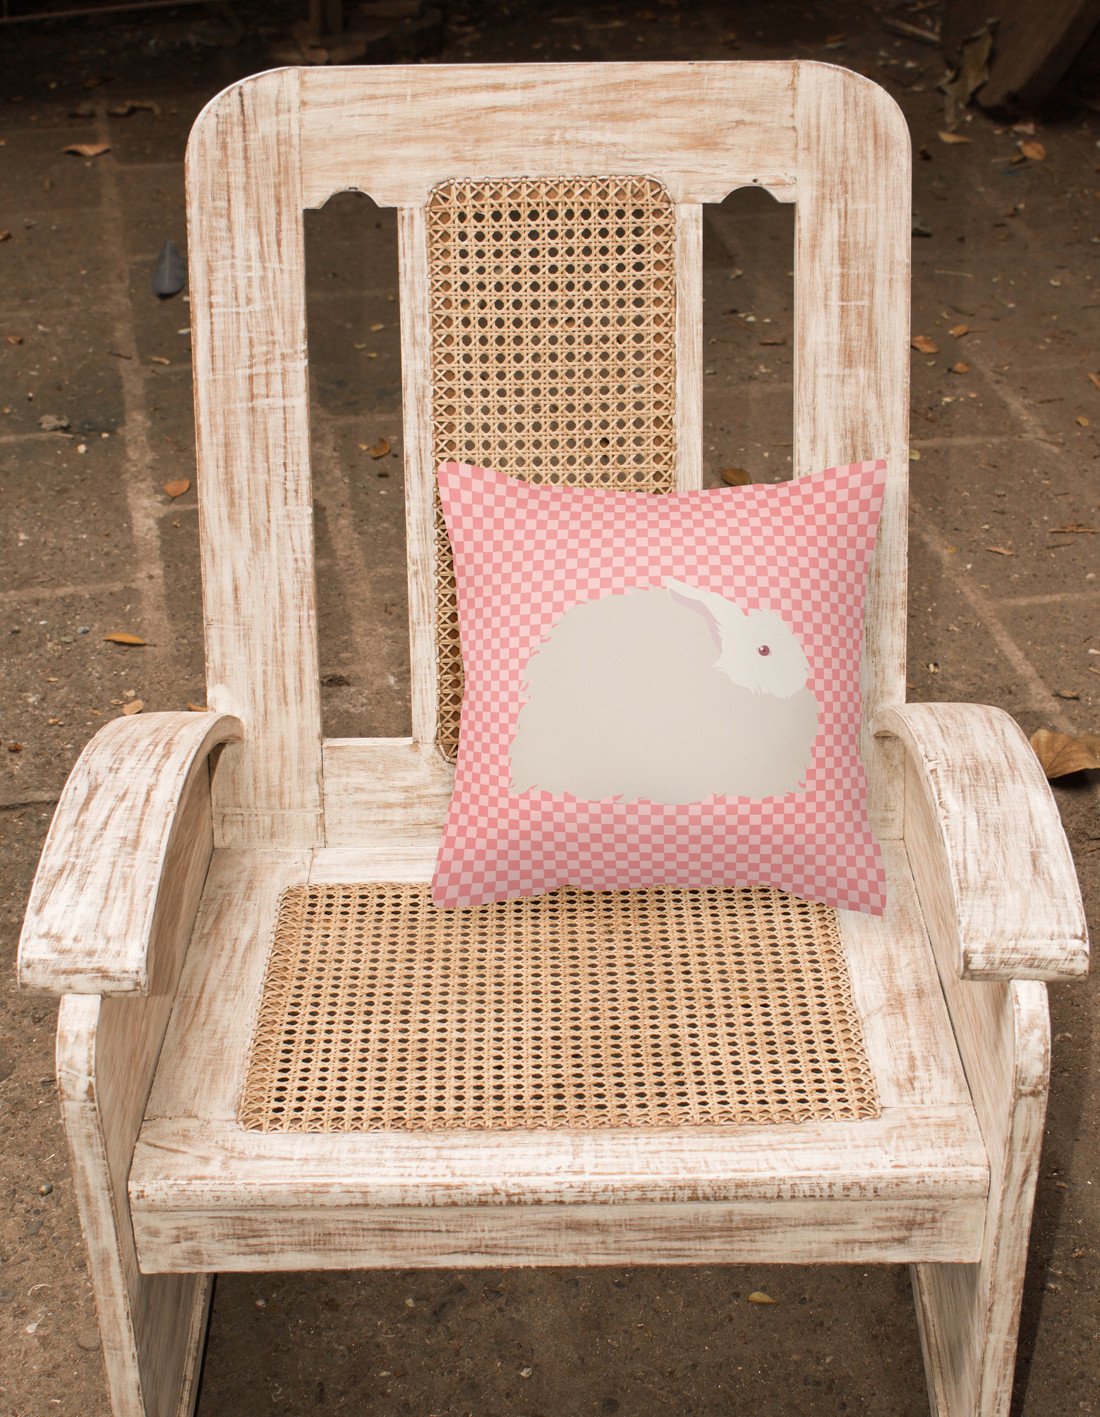 Fluffy Angora Rabbit Pink Check Fabric Decorative Pillow BB7959PW1818 by Caroline's Treasures